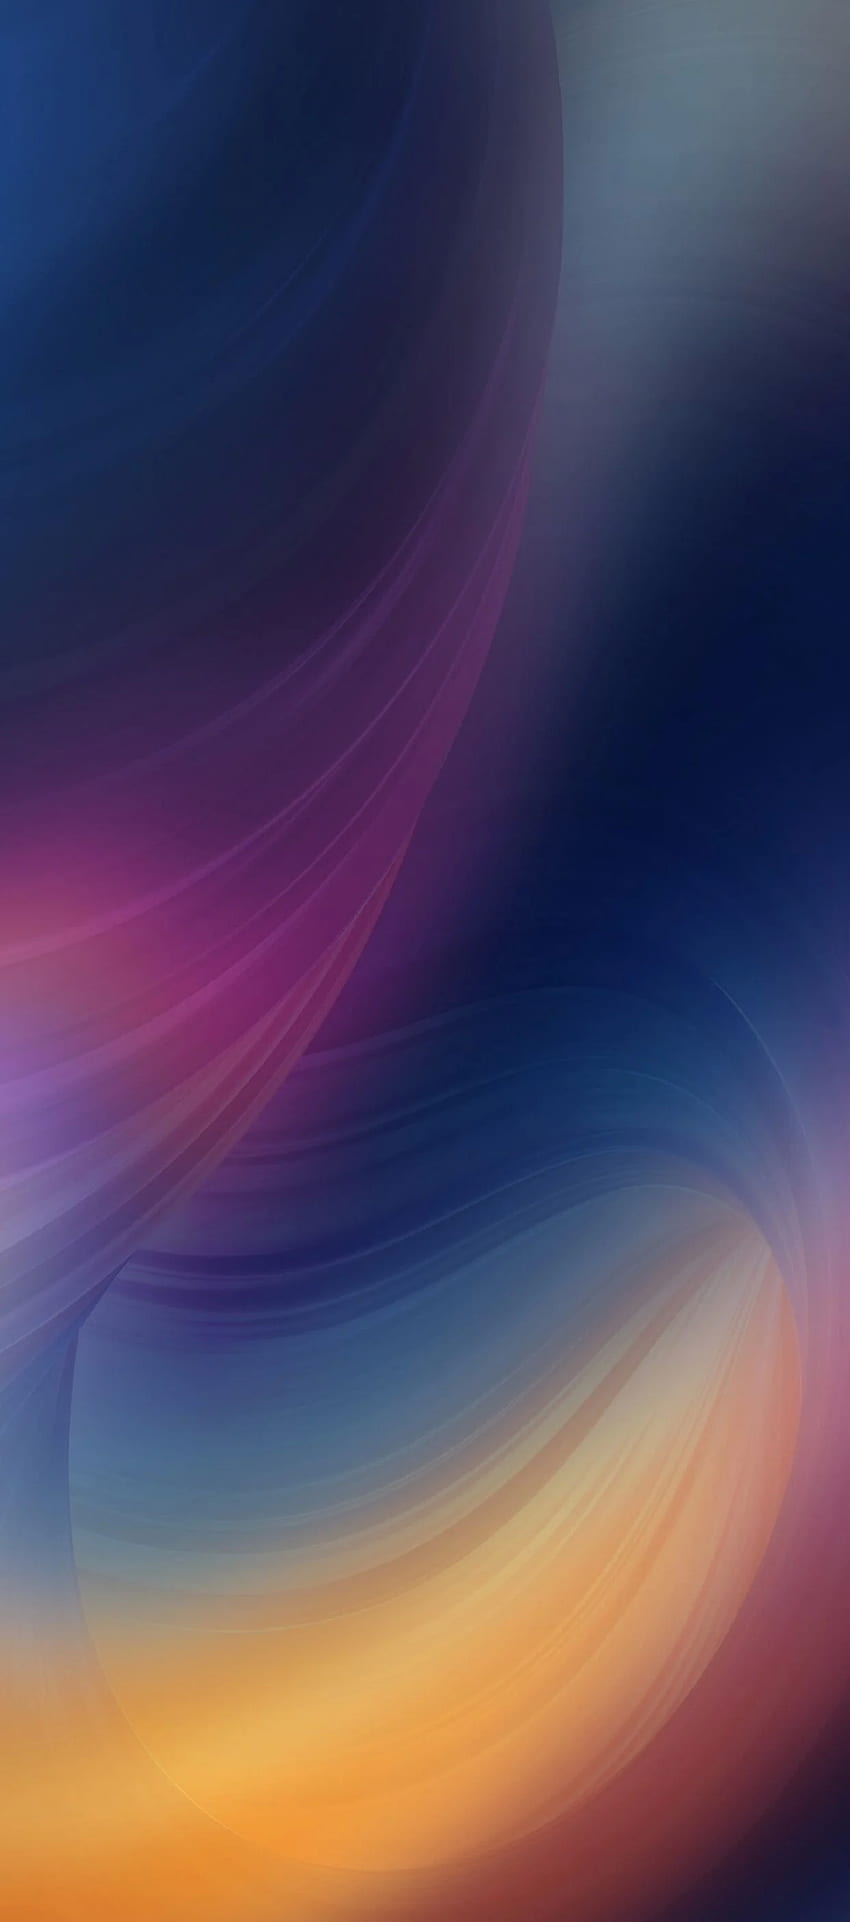 iOS 11, iPhone X, púrpura, azul, limpio, simple, abstracto, manzana, iphone 8, limpio, belleza, colo. Xperia , iPhone 5s , Huawei , iPhone X Resumen fondo de pantalla del teléfono